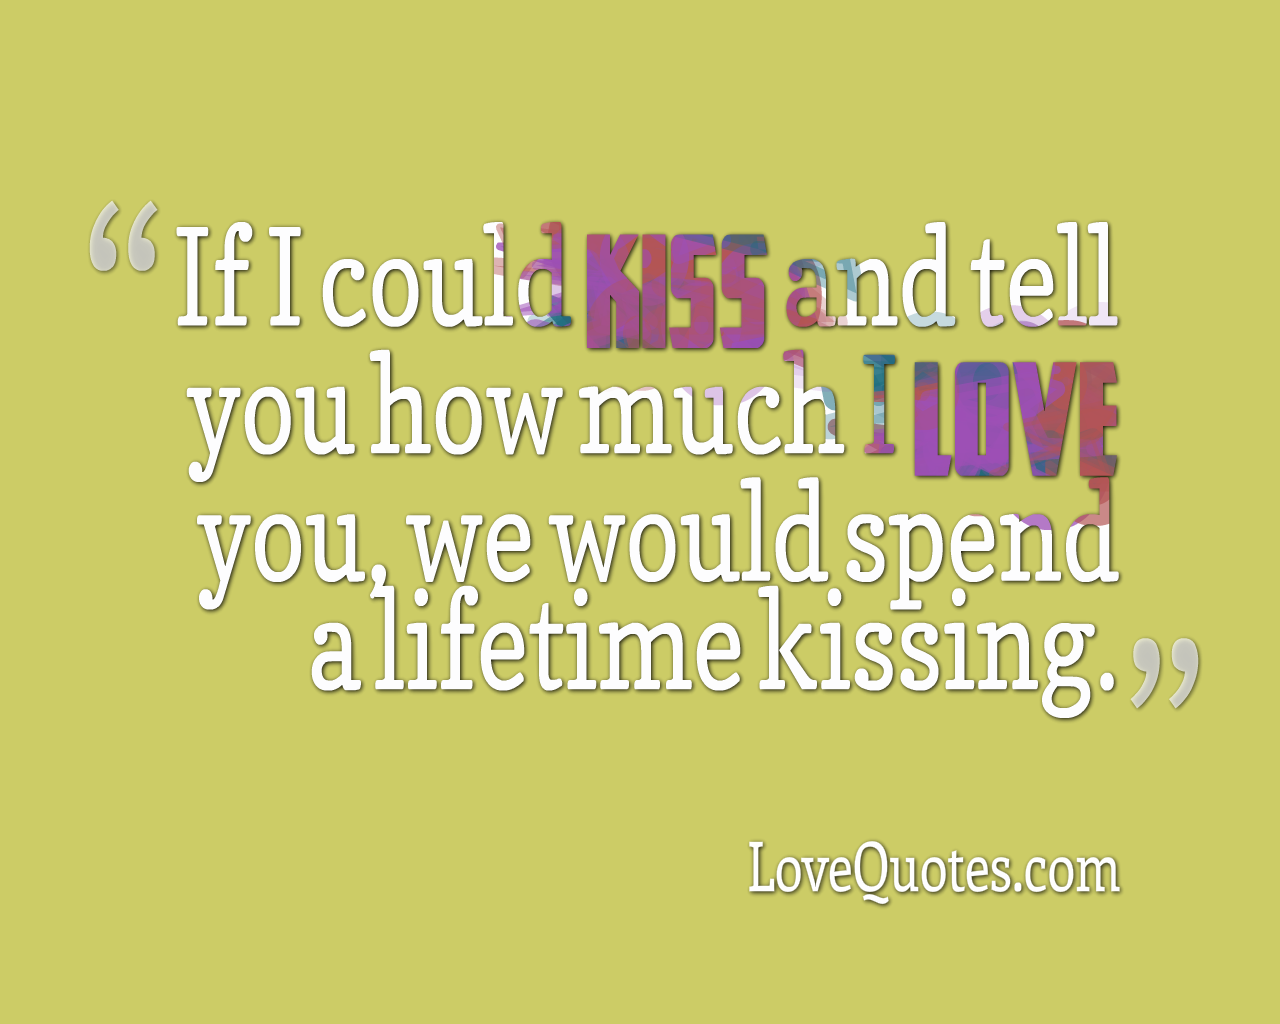 A Lifetime Kissing